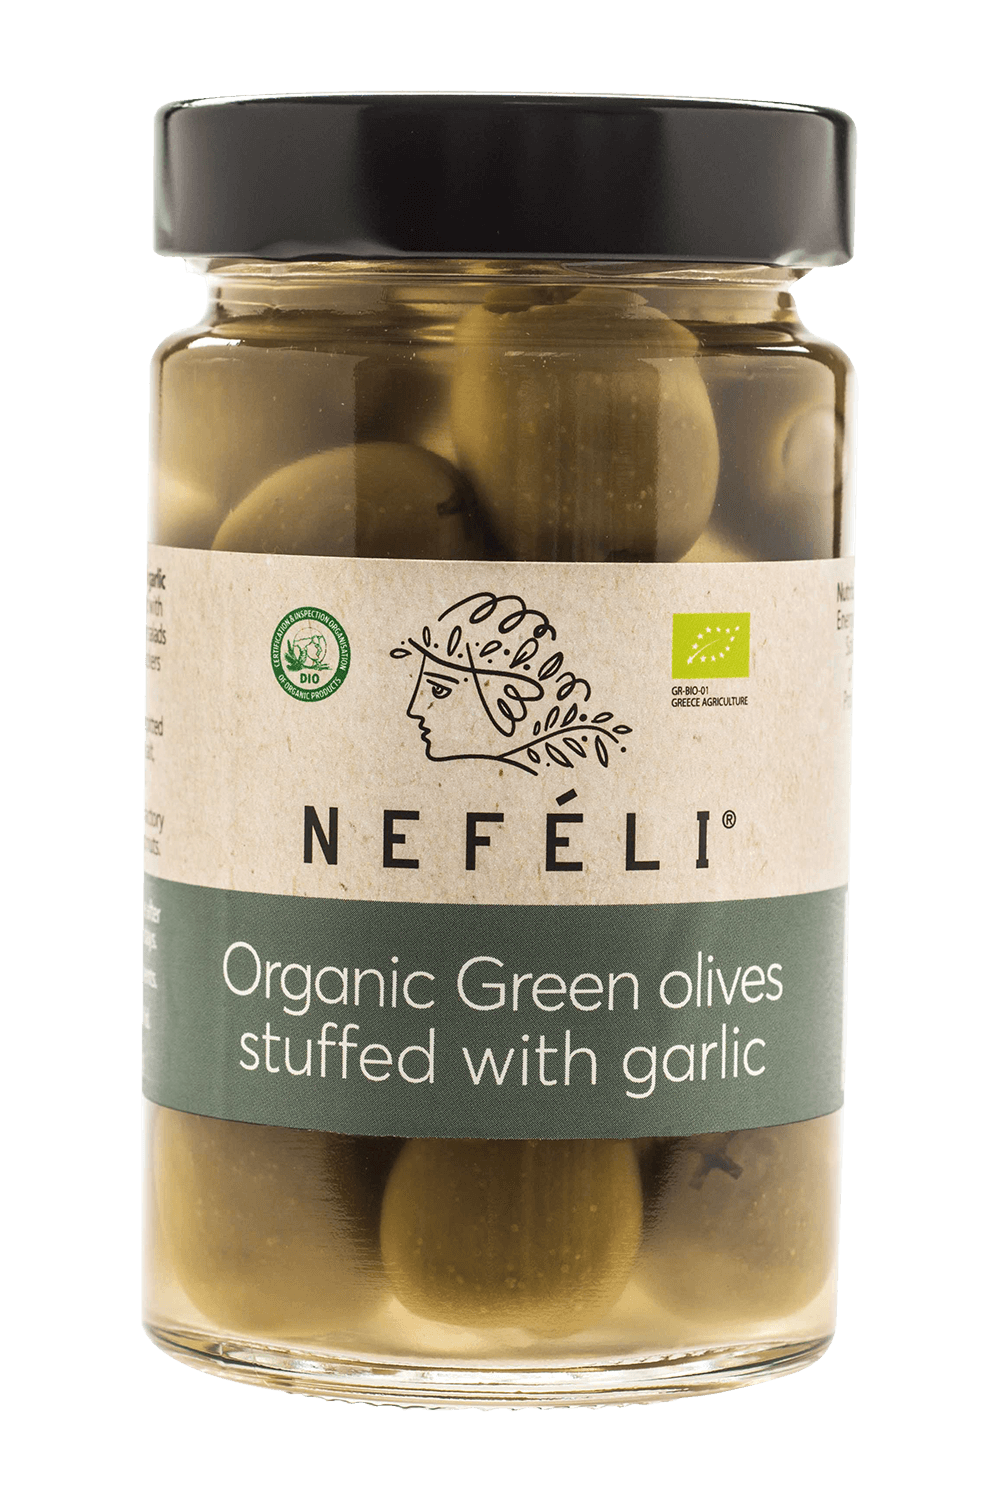 Organic Green olives stuffed with garlic